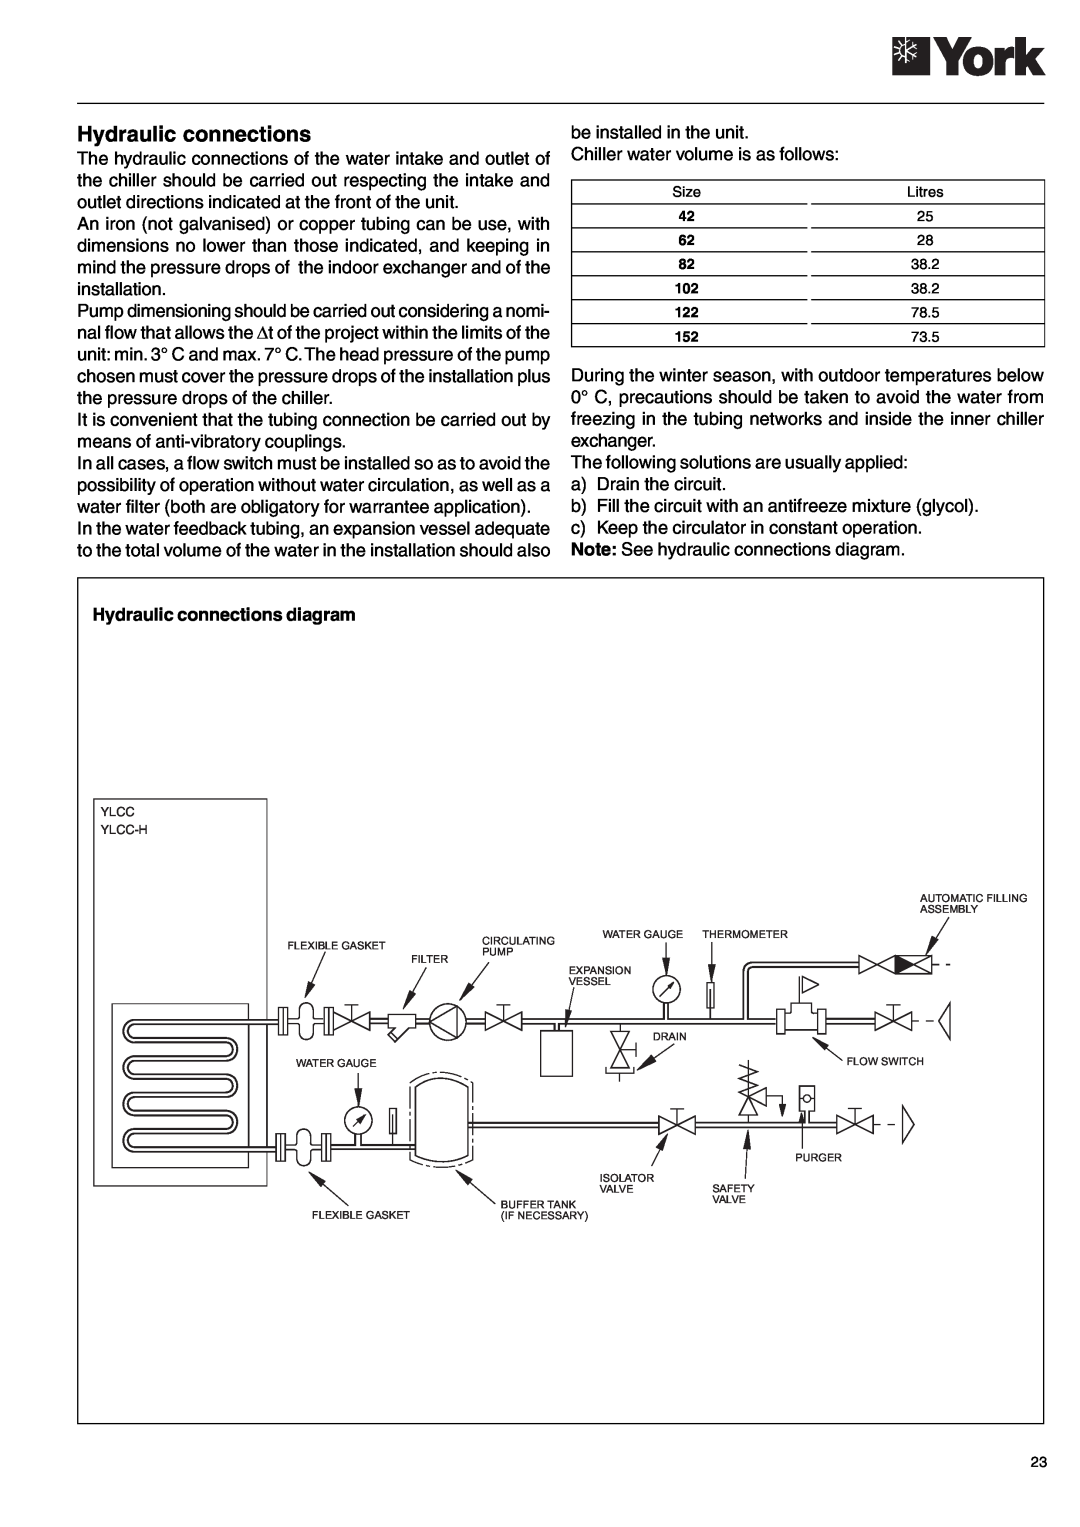 York 152, YLCC 42/62/82/102/112, YLCC-h, 122 manual Hydraulic connections diagram 